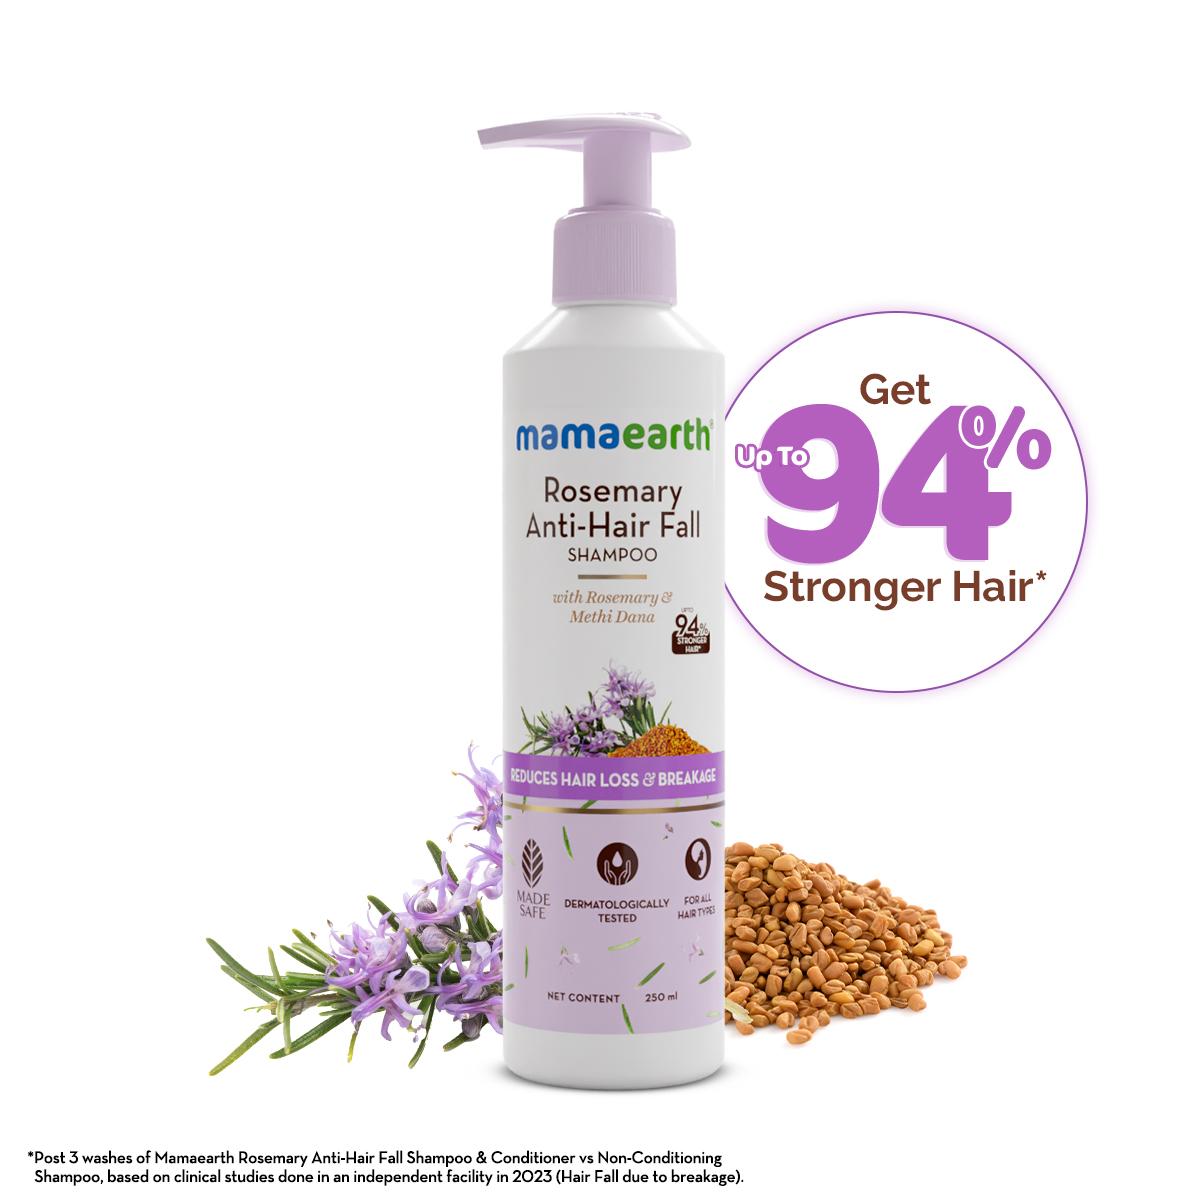 rosemary anti-hair fall shampoo with rosemary & methi dana for reducing hair loss & breakage - 250 ml